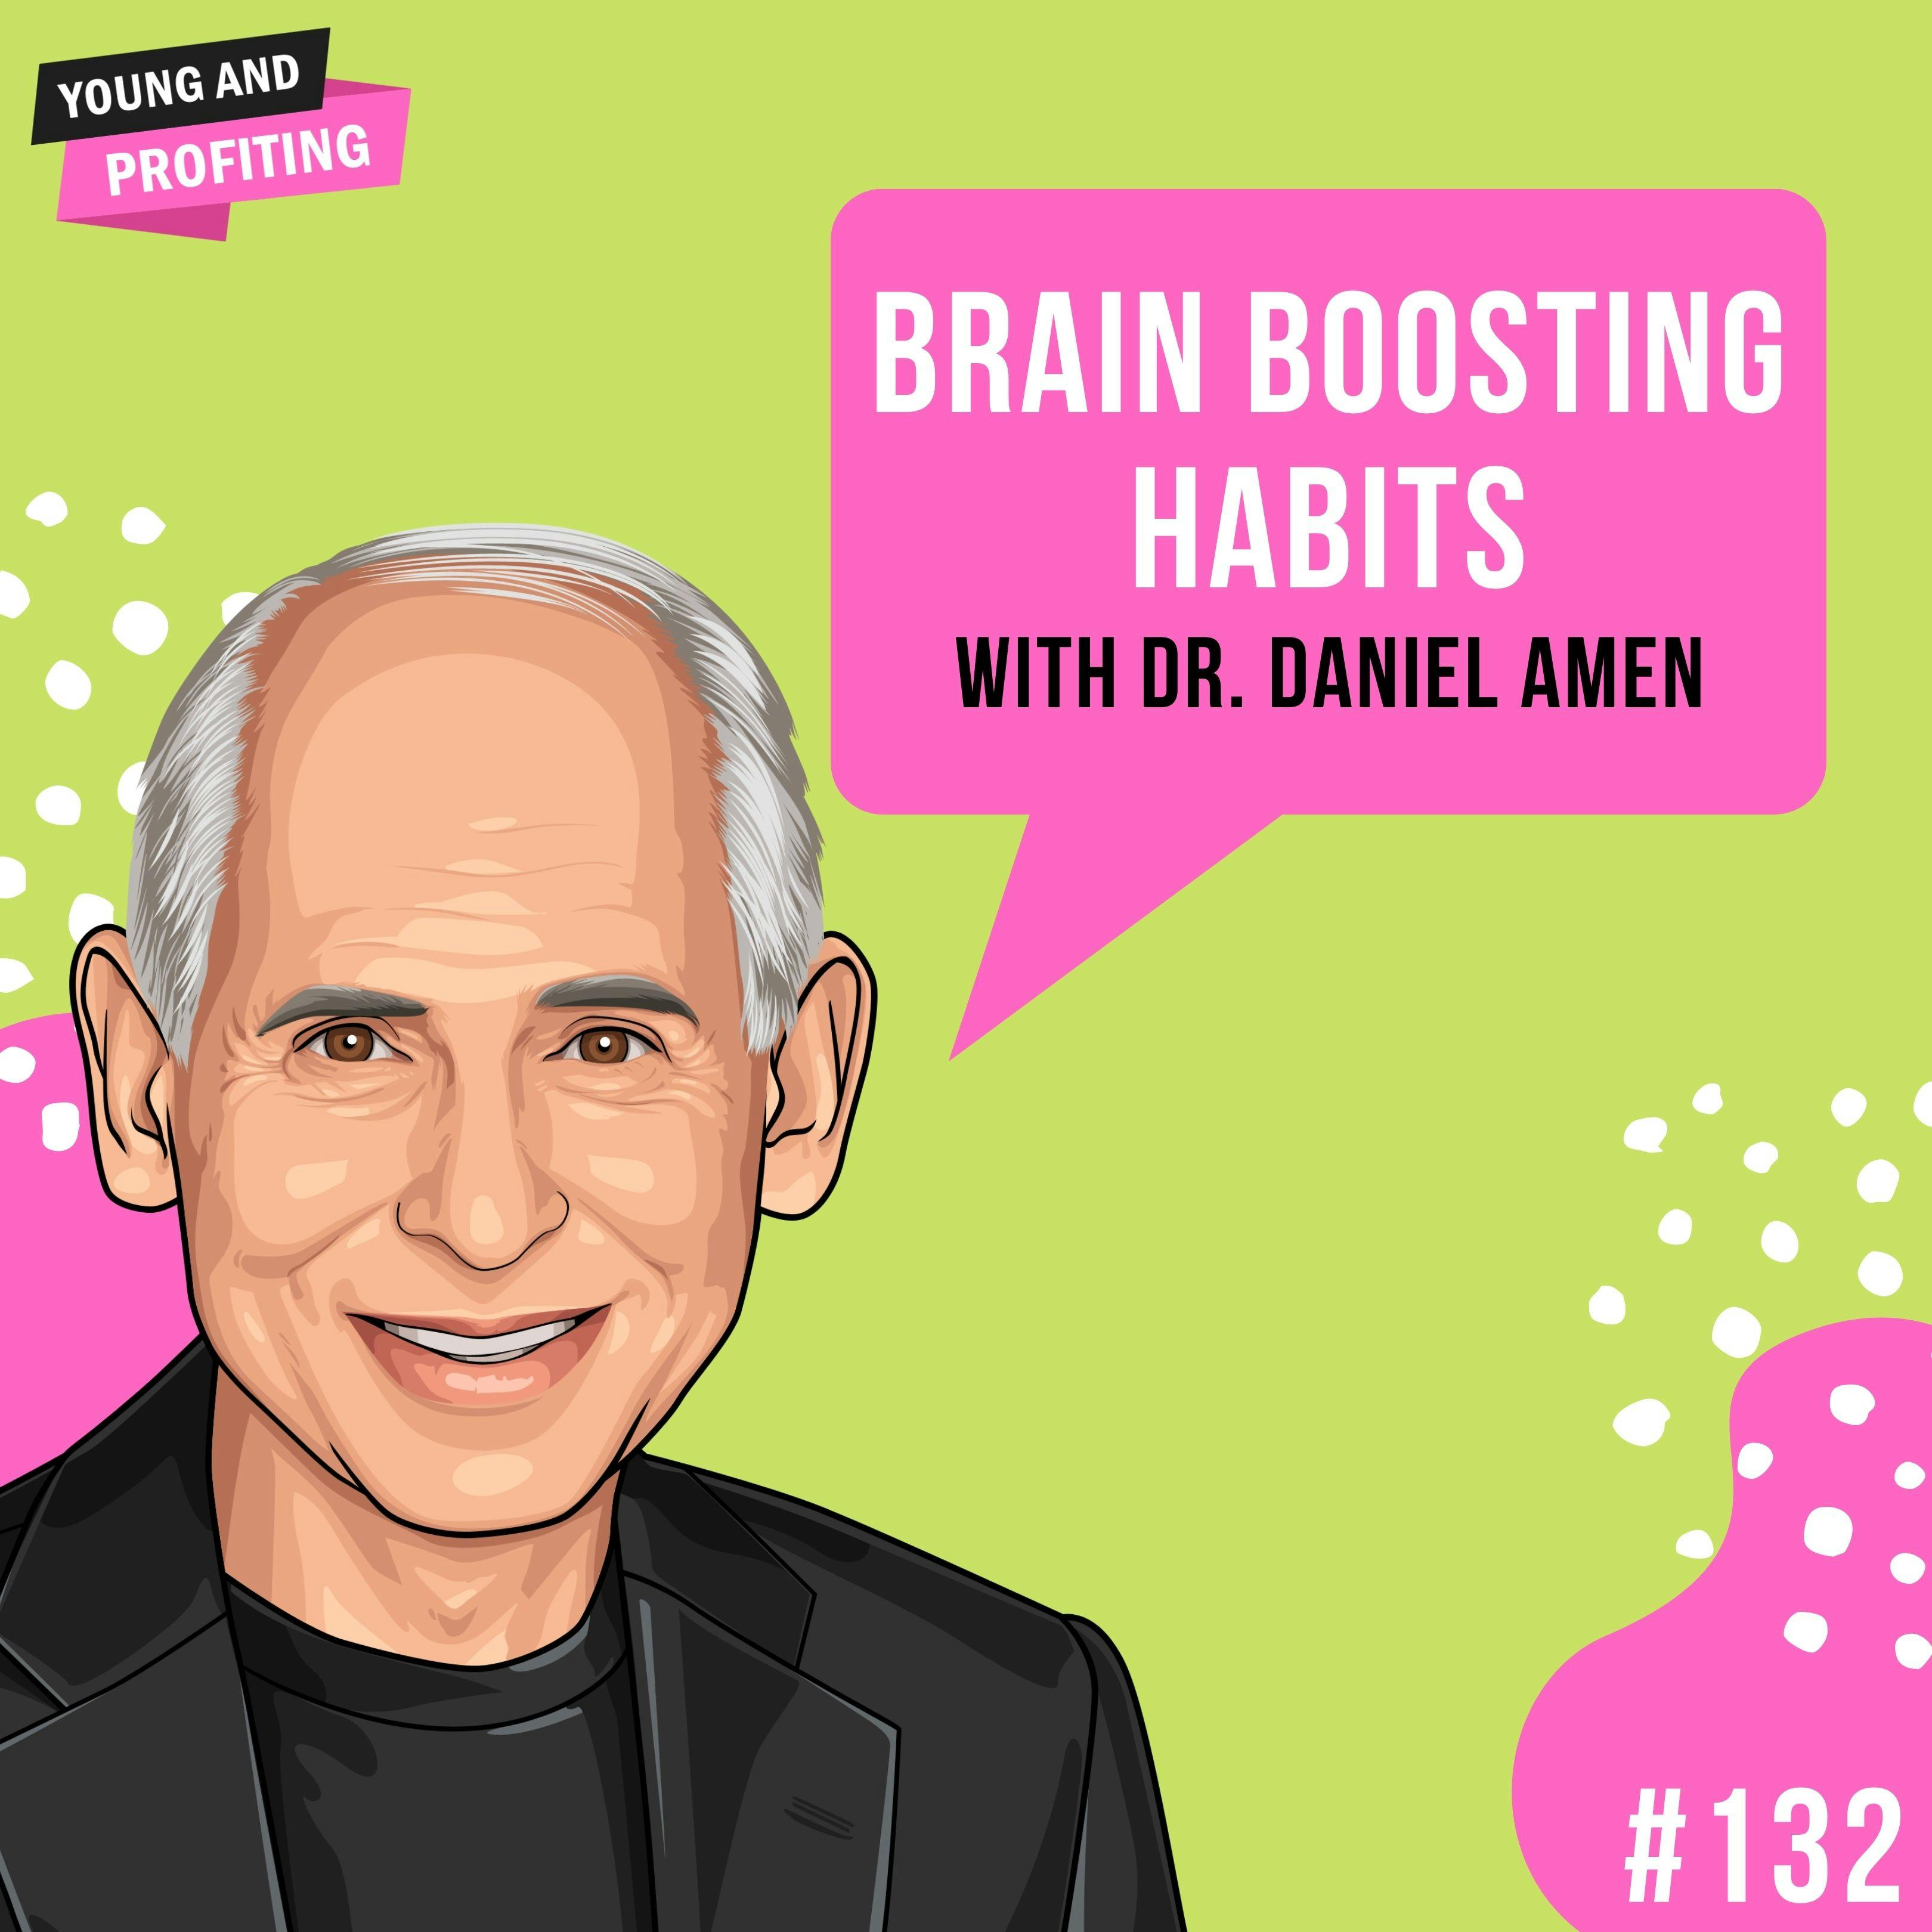 Dr. Daniel Amen: Brain Boosting Habits | E132 by Hala Taha | YAP Media Network